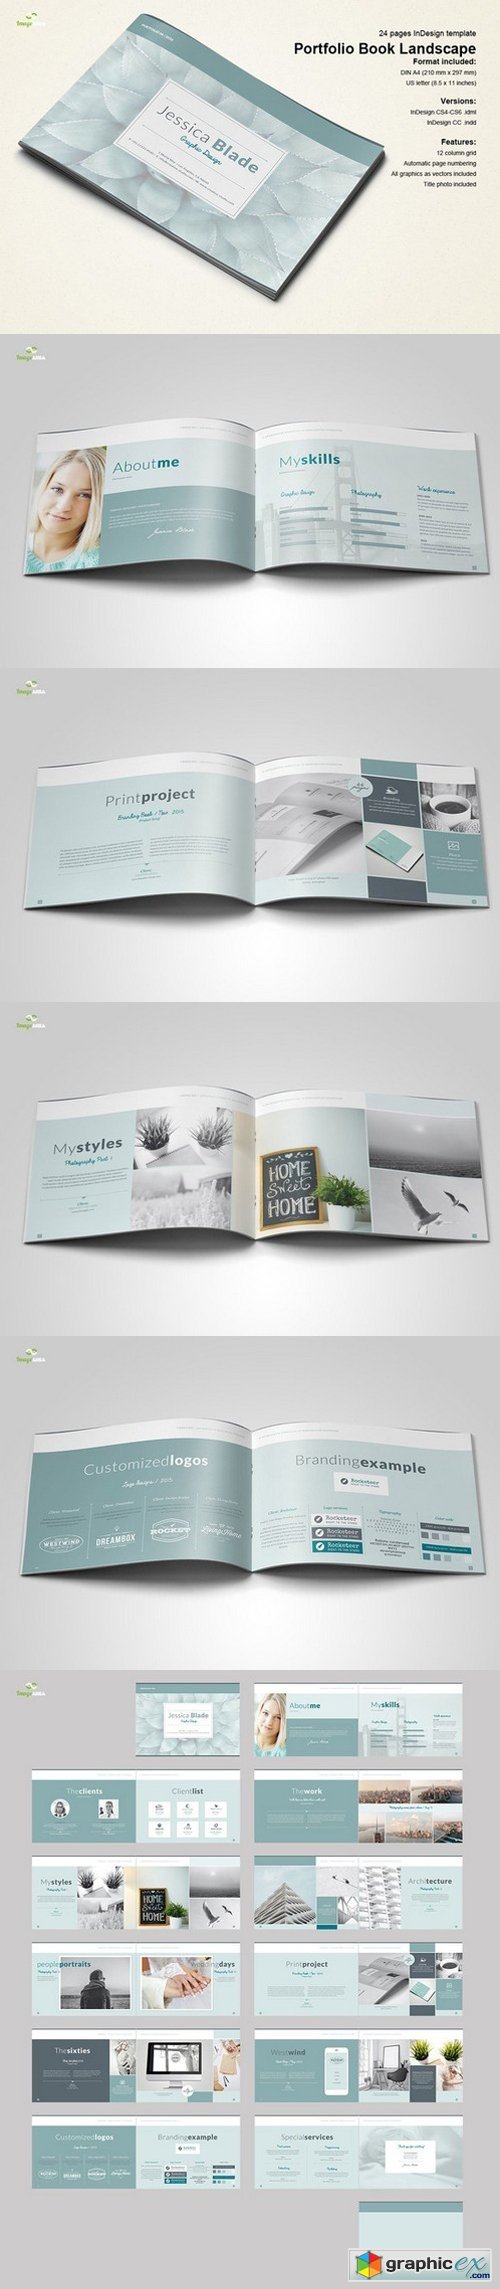 Horizontal Portfolio Book